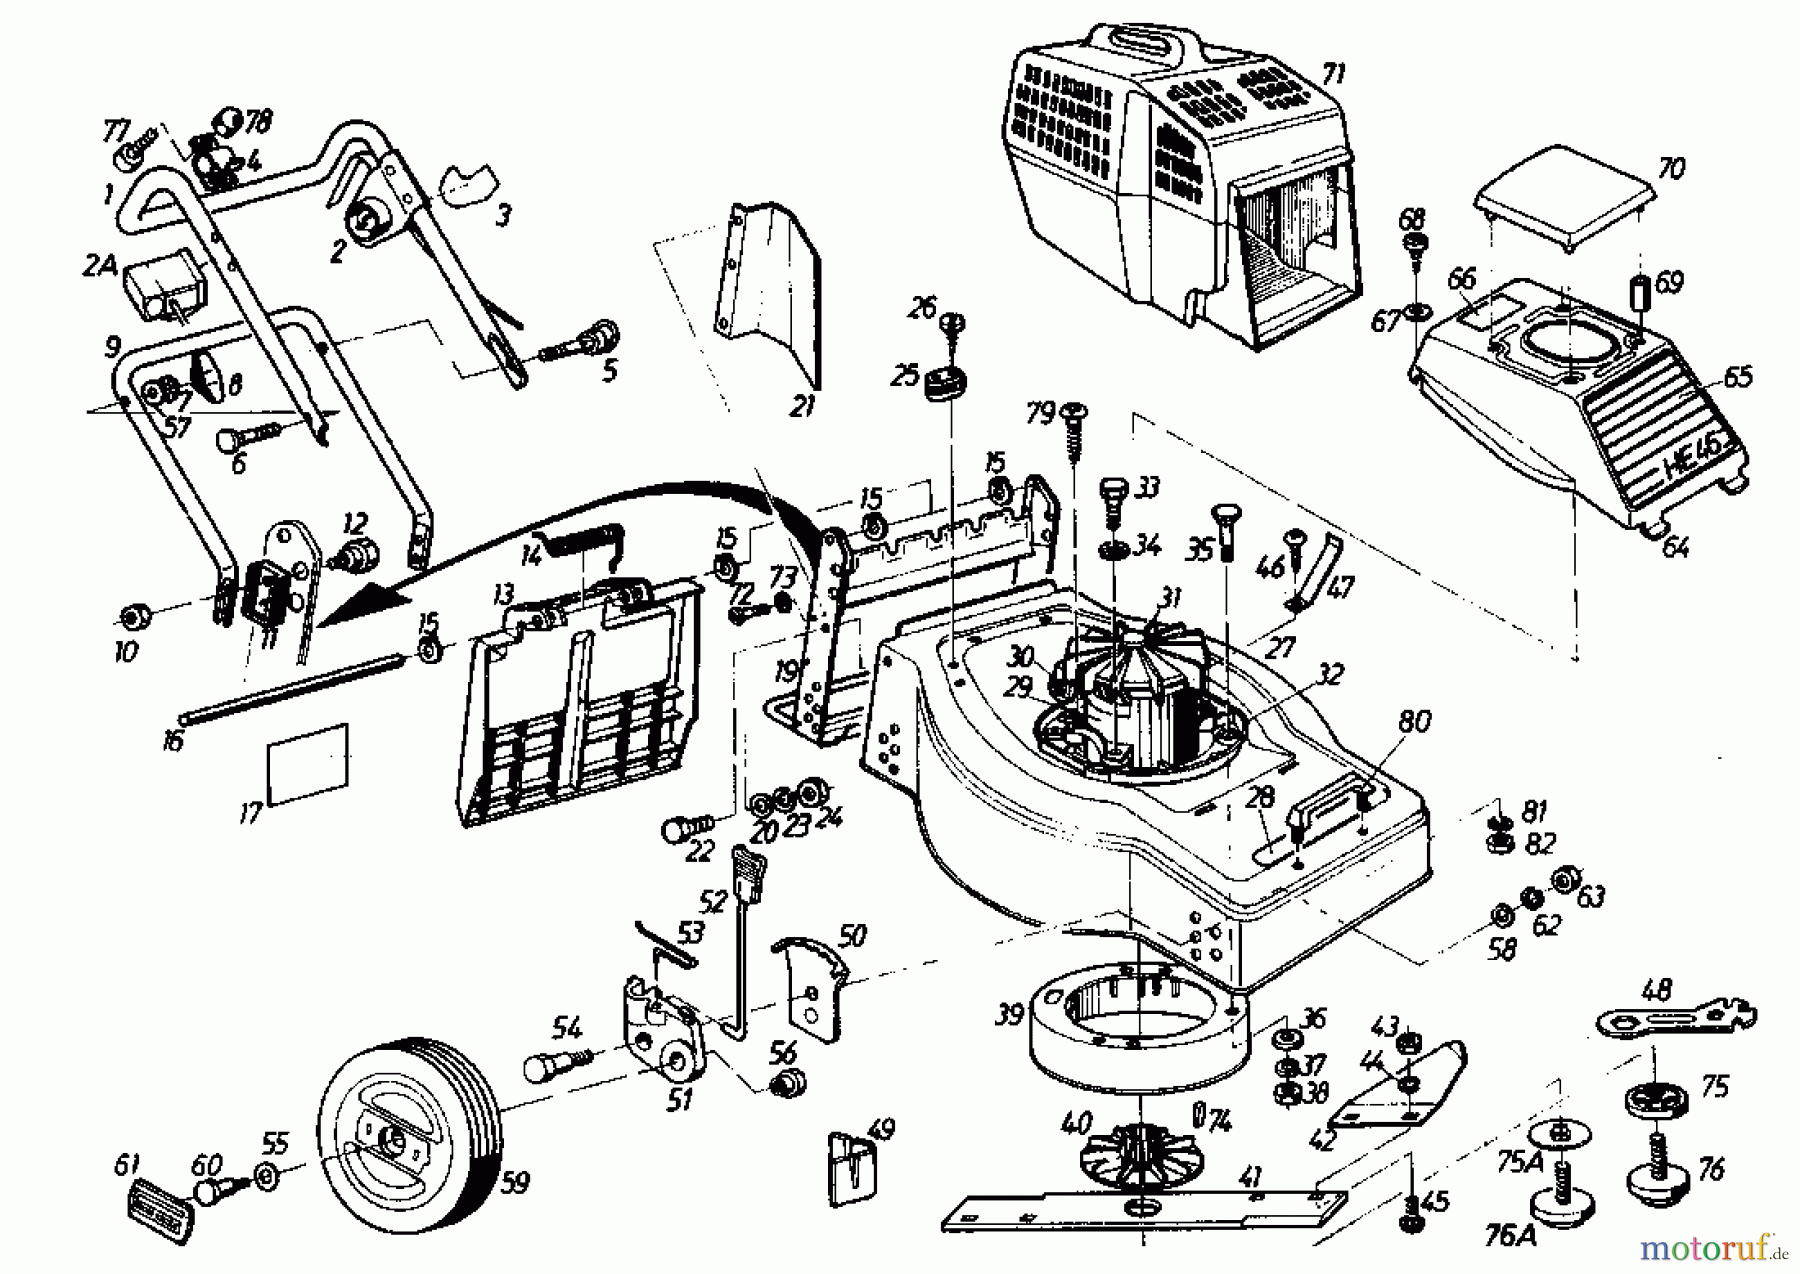  Gutbrod Electric mower HE 46 02865.03  (1985) Basic machine